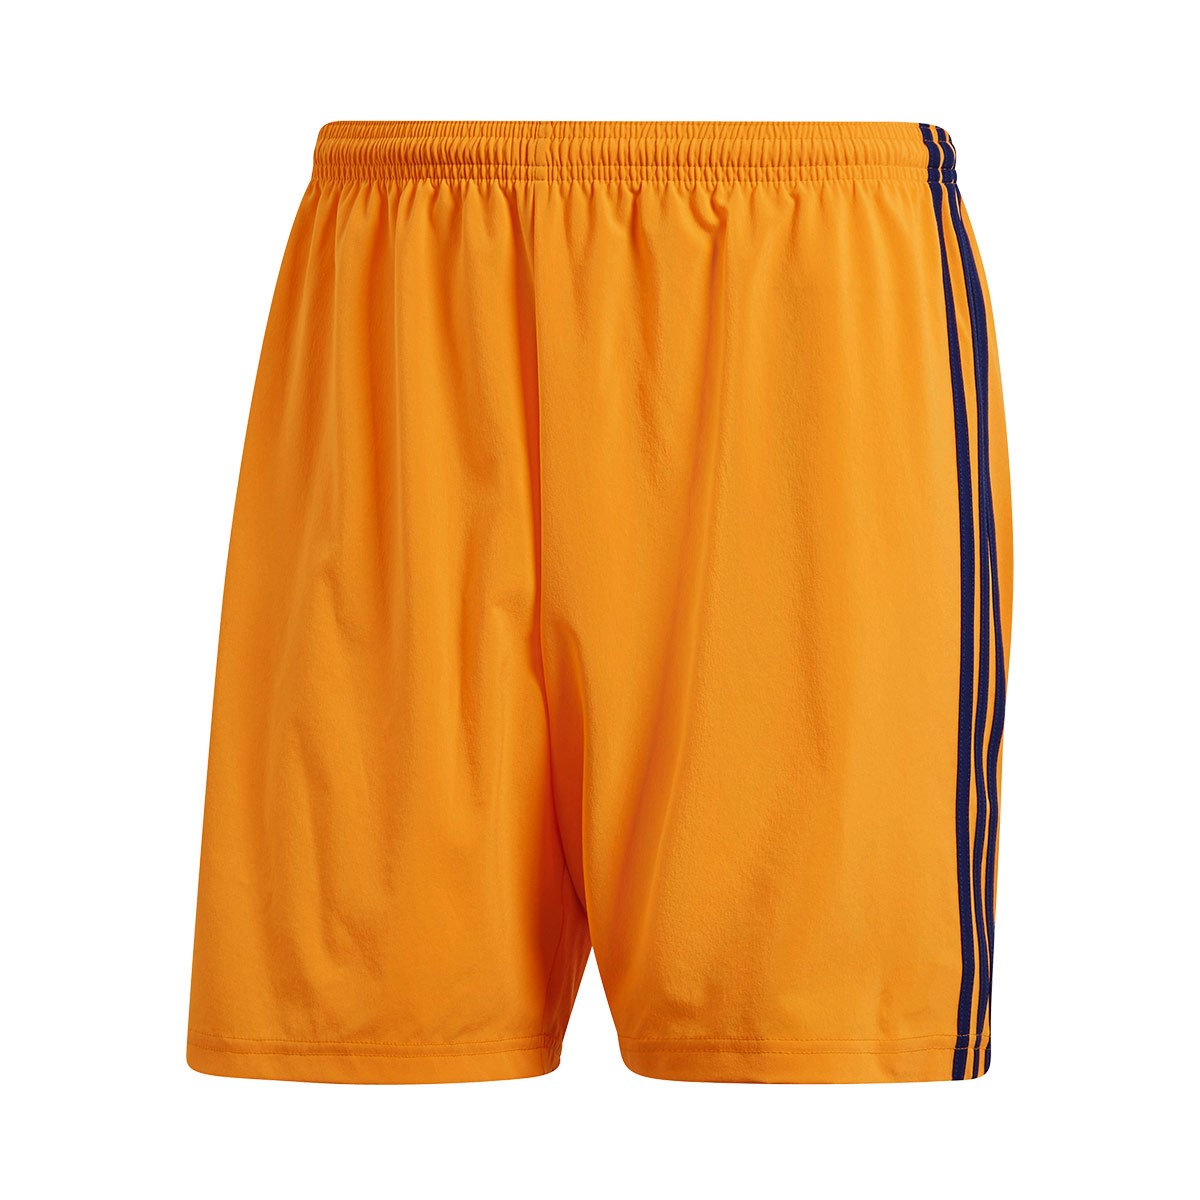 Shorts adidas Condivo 18 Lucky orange 